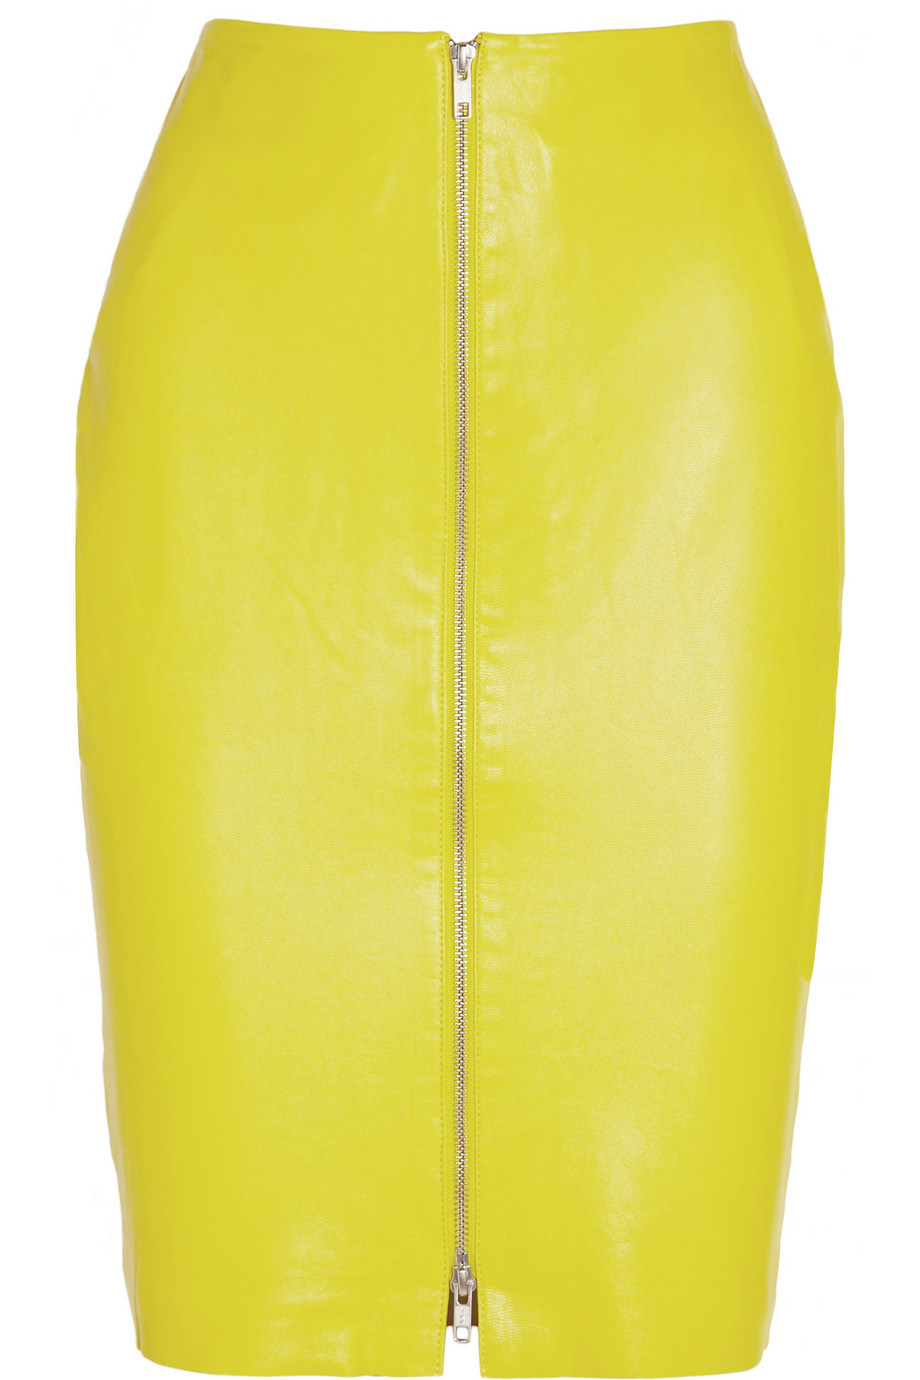 Lyst - By Malene Birger Eldiuna Leather Pencil Skirt in Yellow